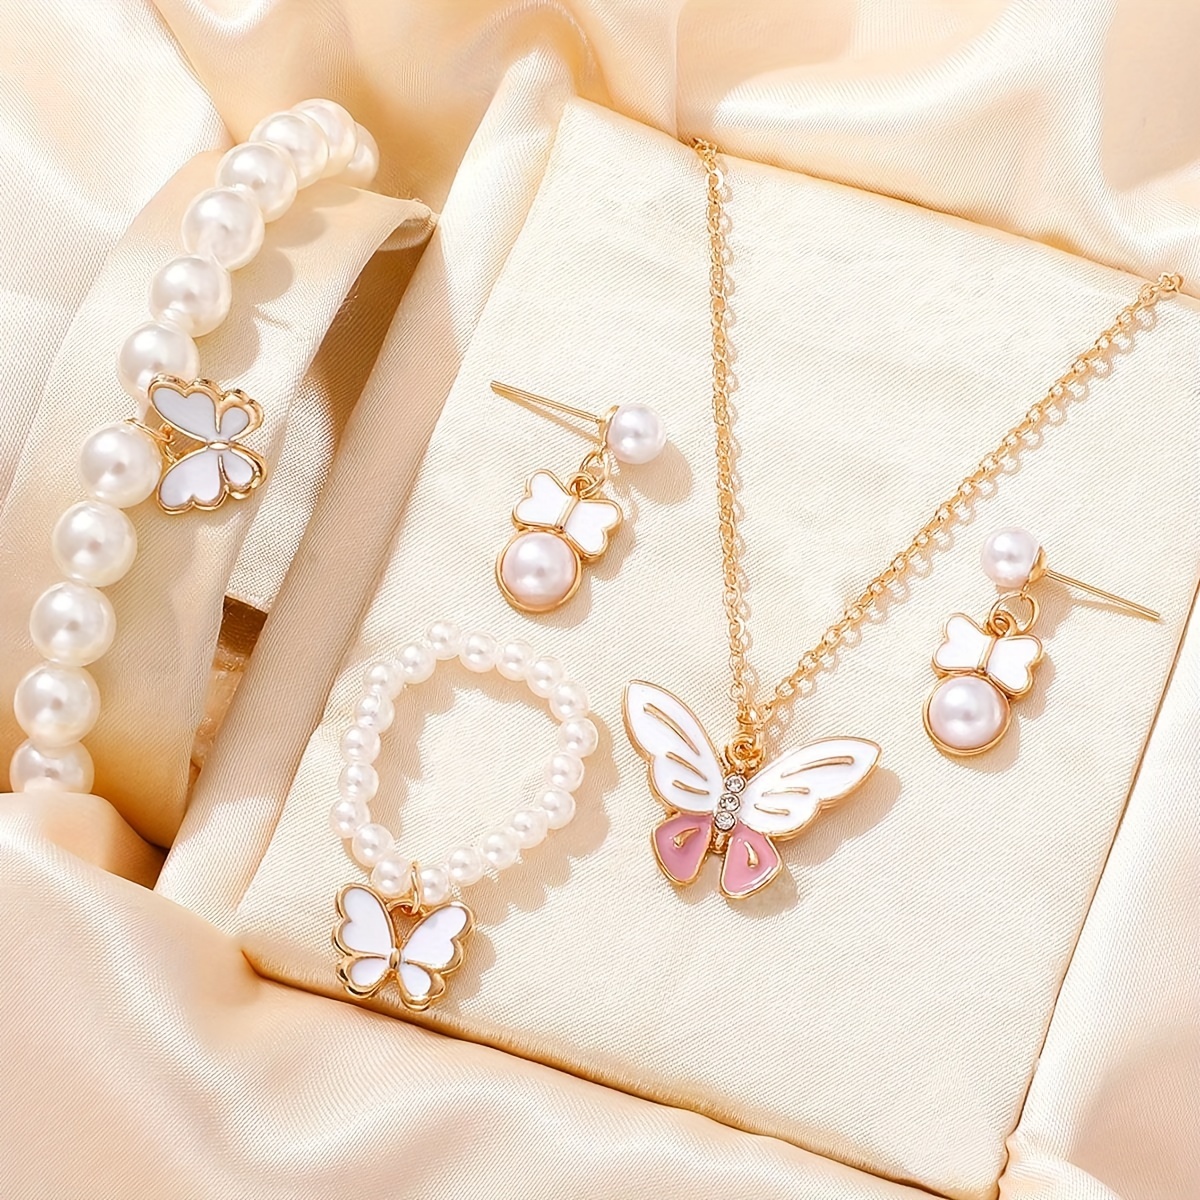 

Bohemian Style Ladies Fashion Faux Pearl Butterfly Jewelry Set With Necklace, Earrings, Bracelet, Elegant Gift For Women